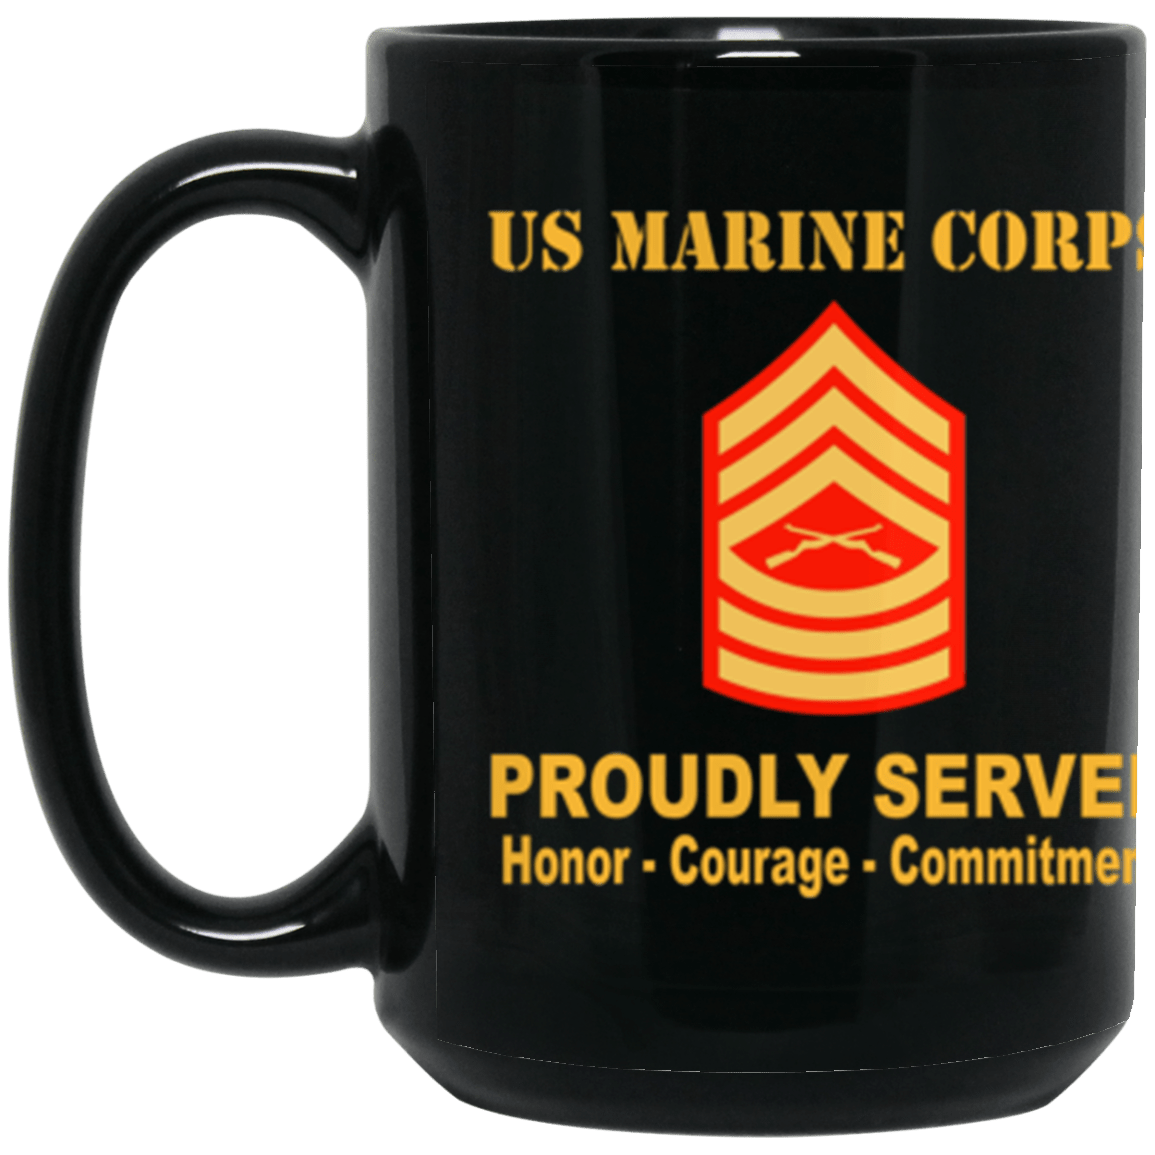 USMC E-8 Master Sergeant E8 MSgt Staff Noncommissioned Officer Ranks Proudly Served Core Values 15 oz. Black Mug